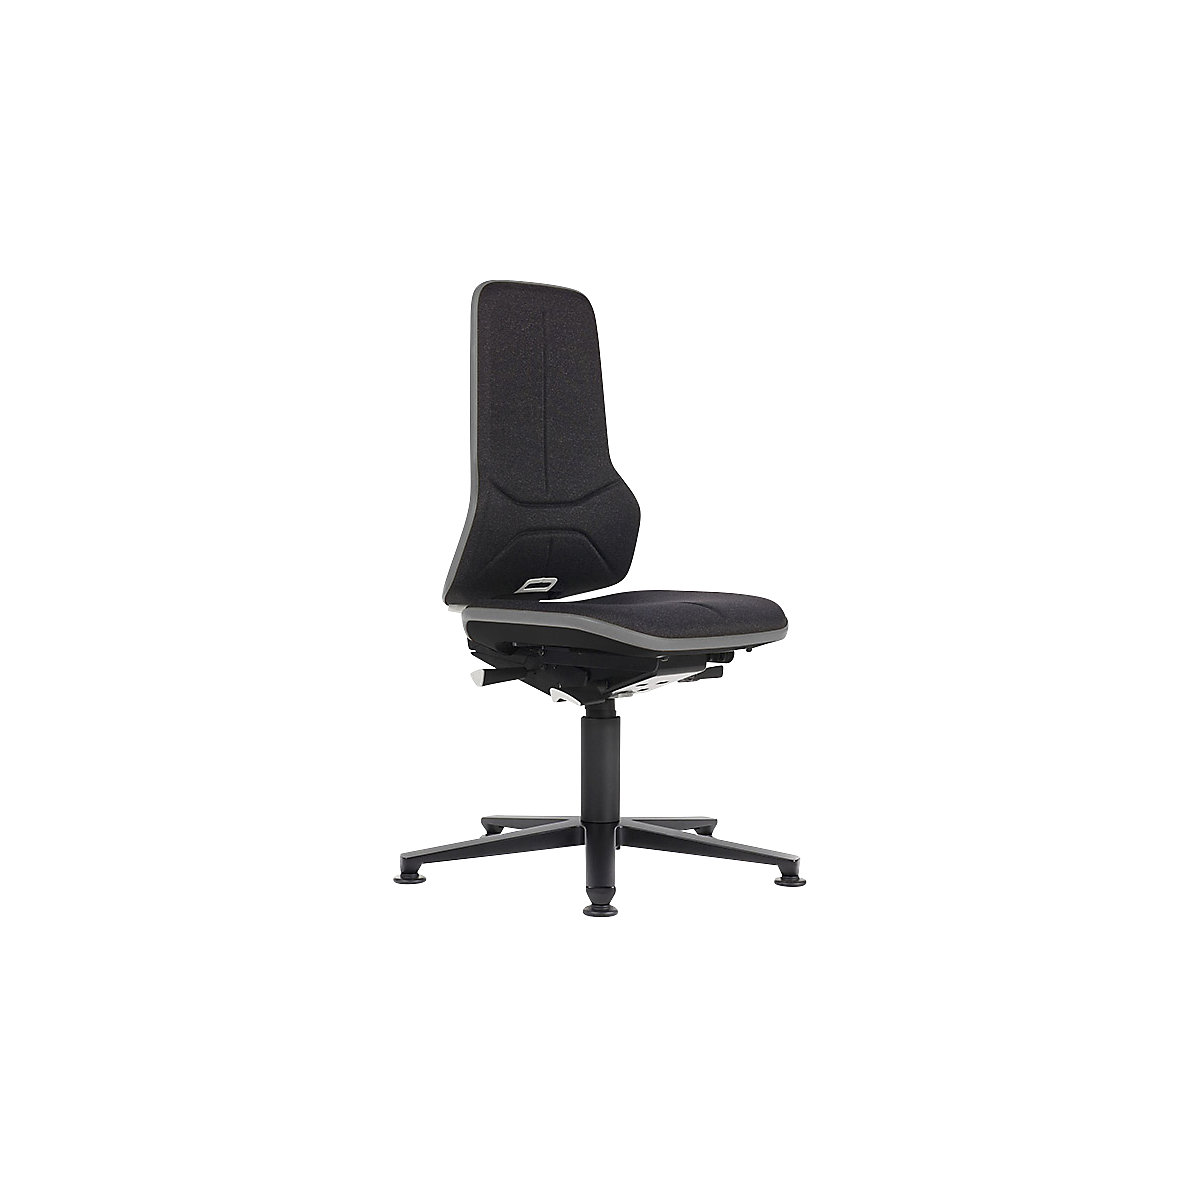 Radna okretna stolica NEON ESD, kliznik – bimos, sinkroni mehanizam, tkanina, fleksibilna traka u sivoj boji-2